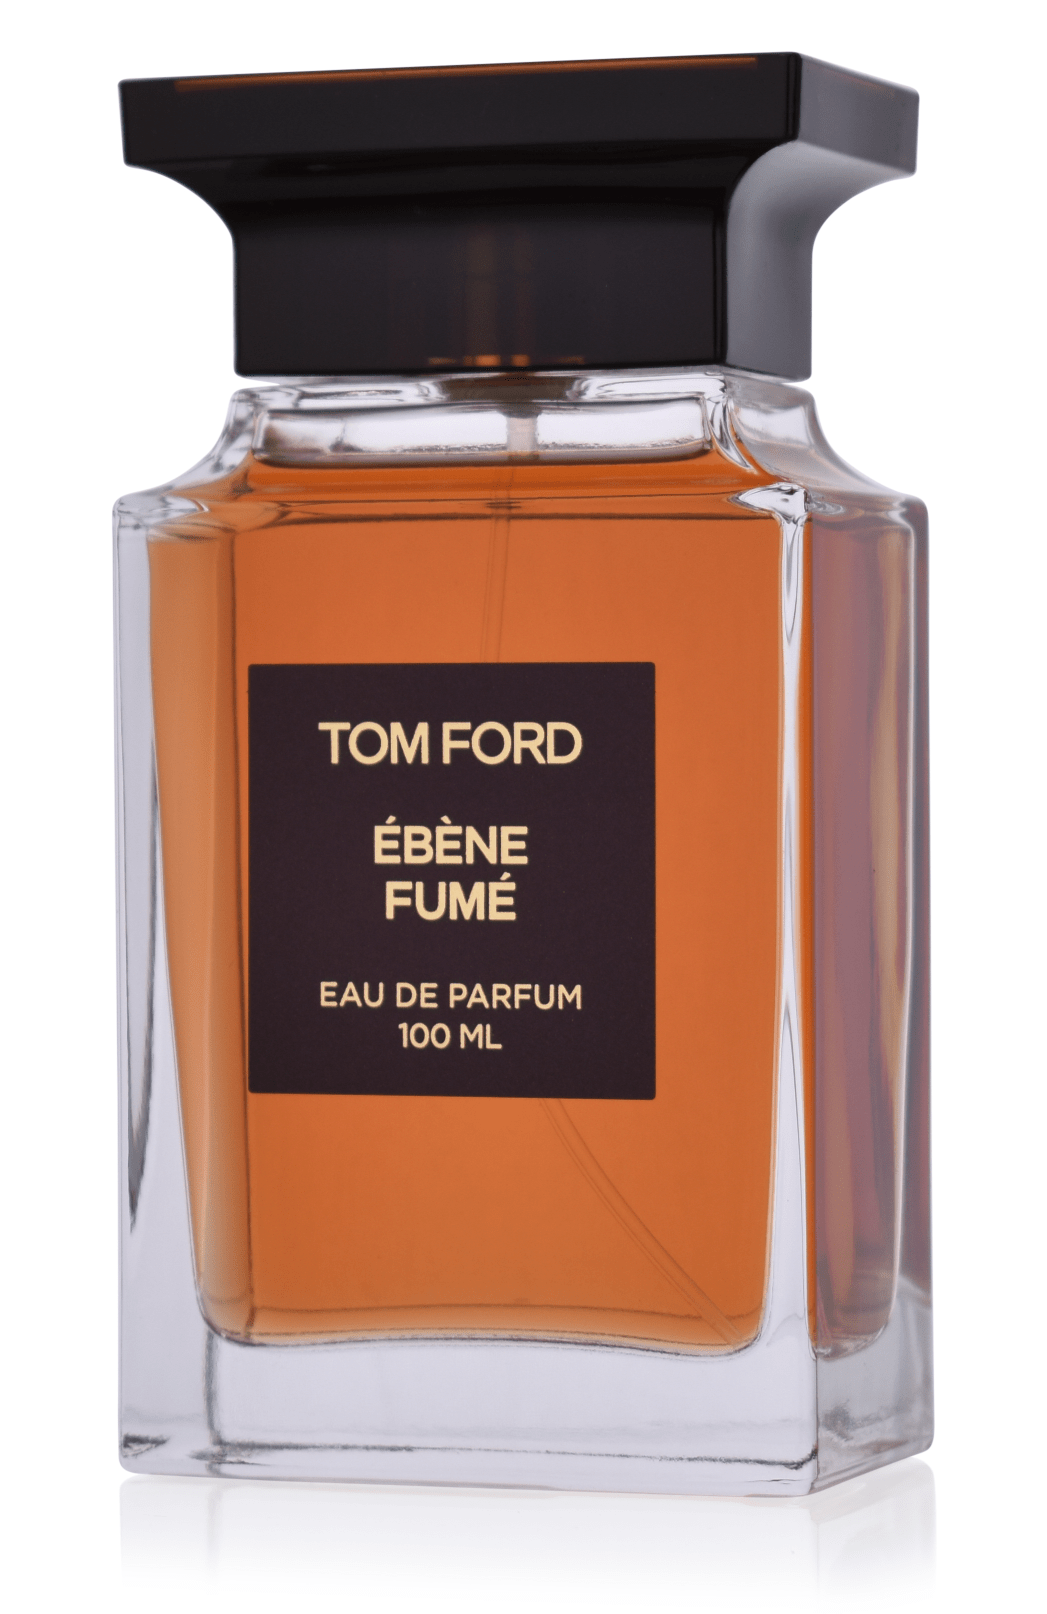 Tom Ford Ebene Fume 5 ml Eau de Parfum Abfüllung